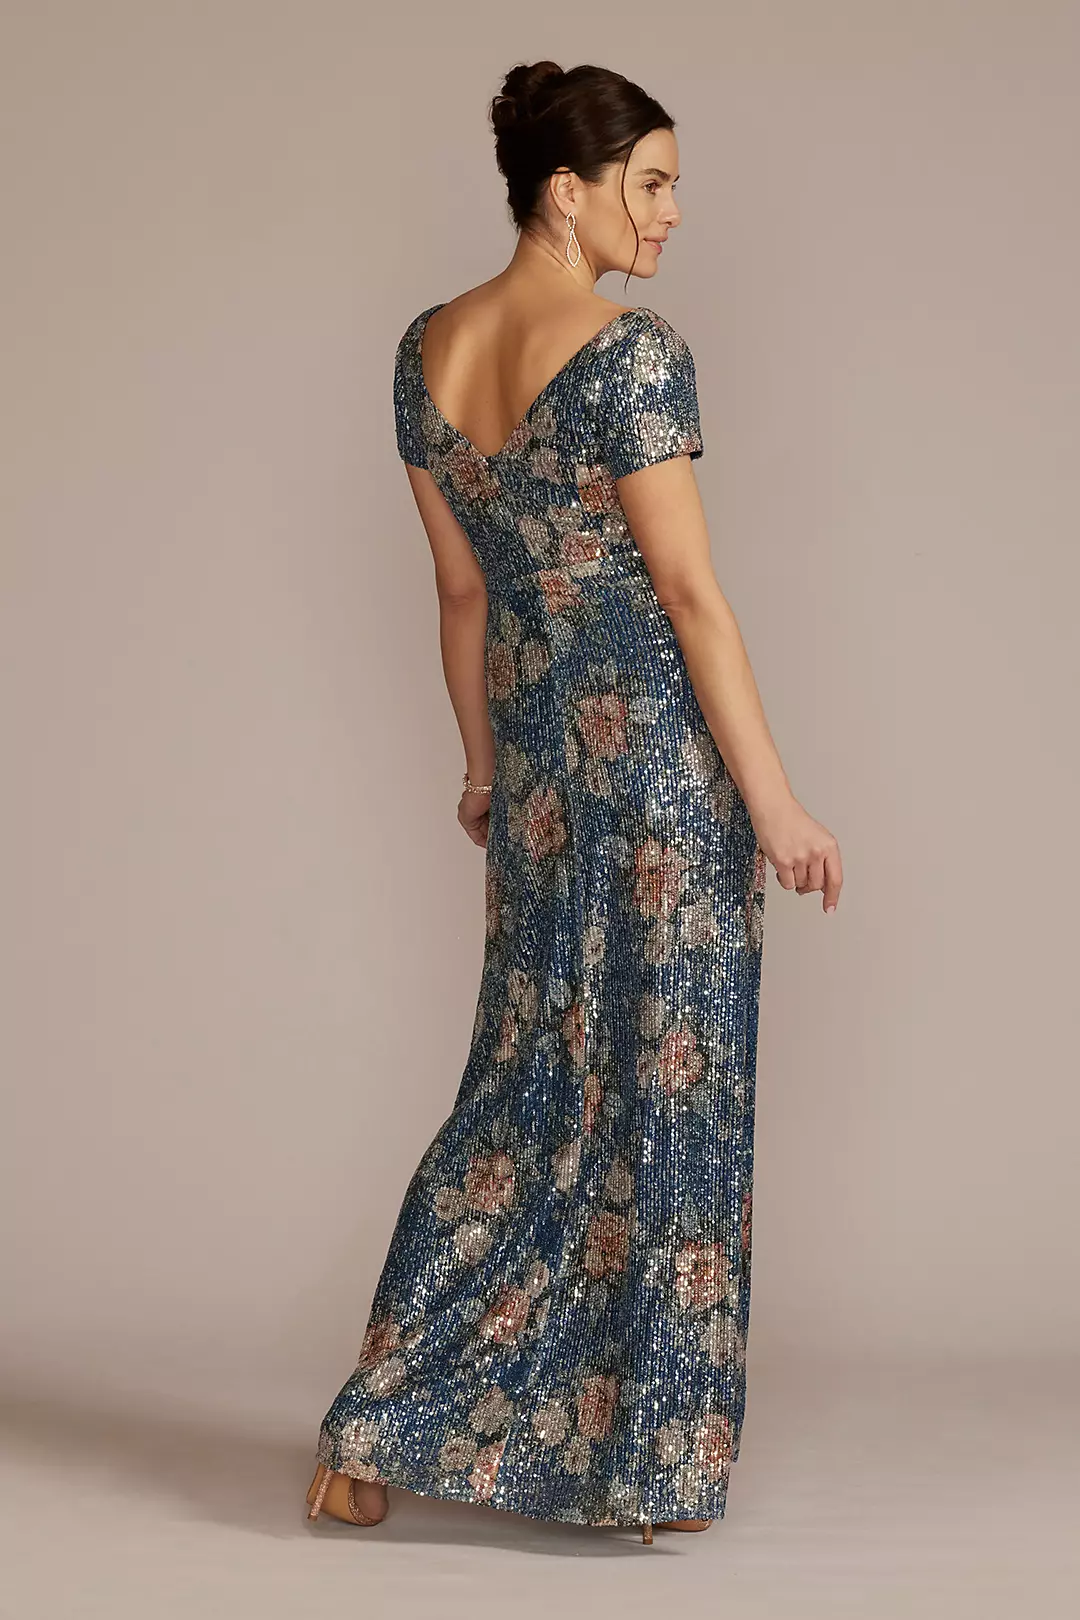 Short Sleeve Allover Sequin Floral A-Line Image 2